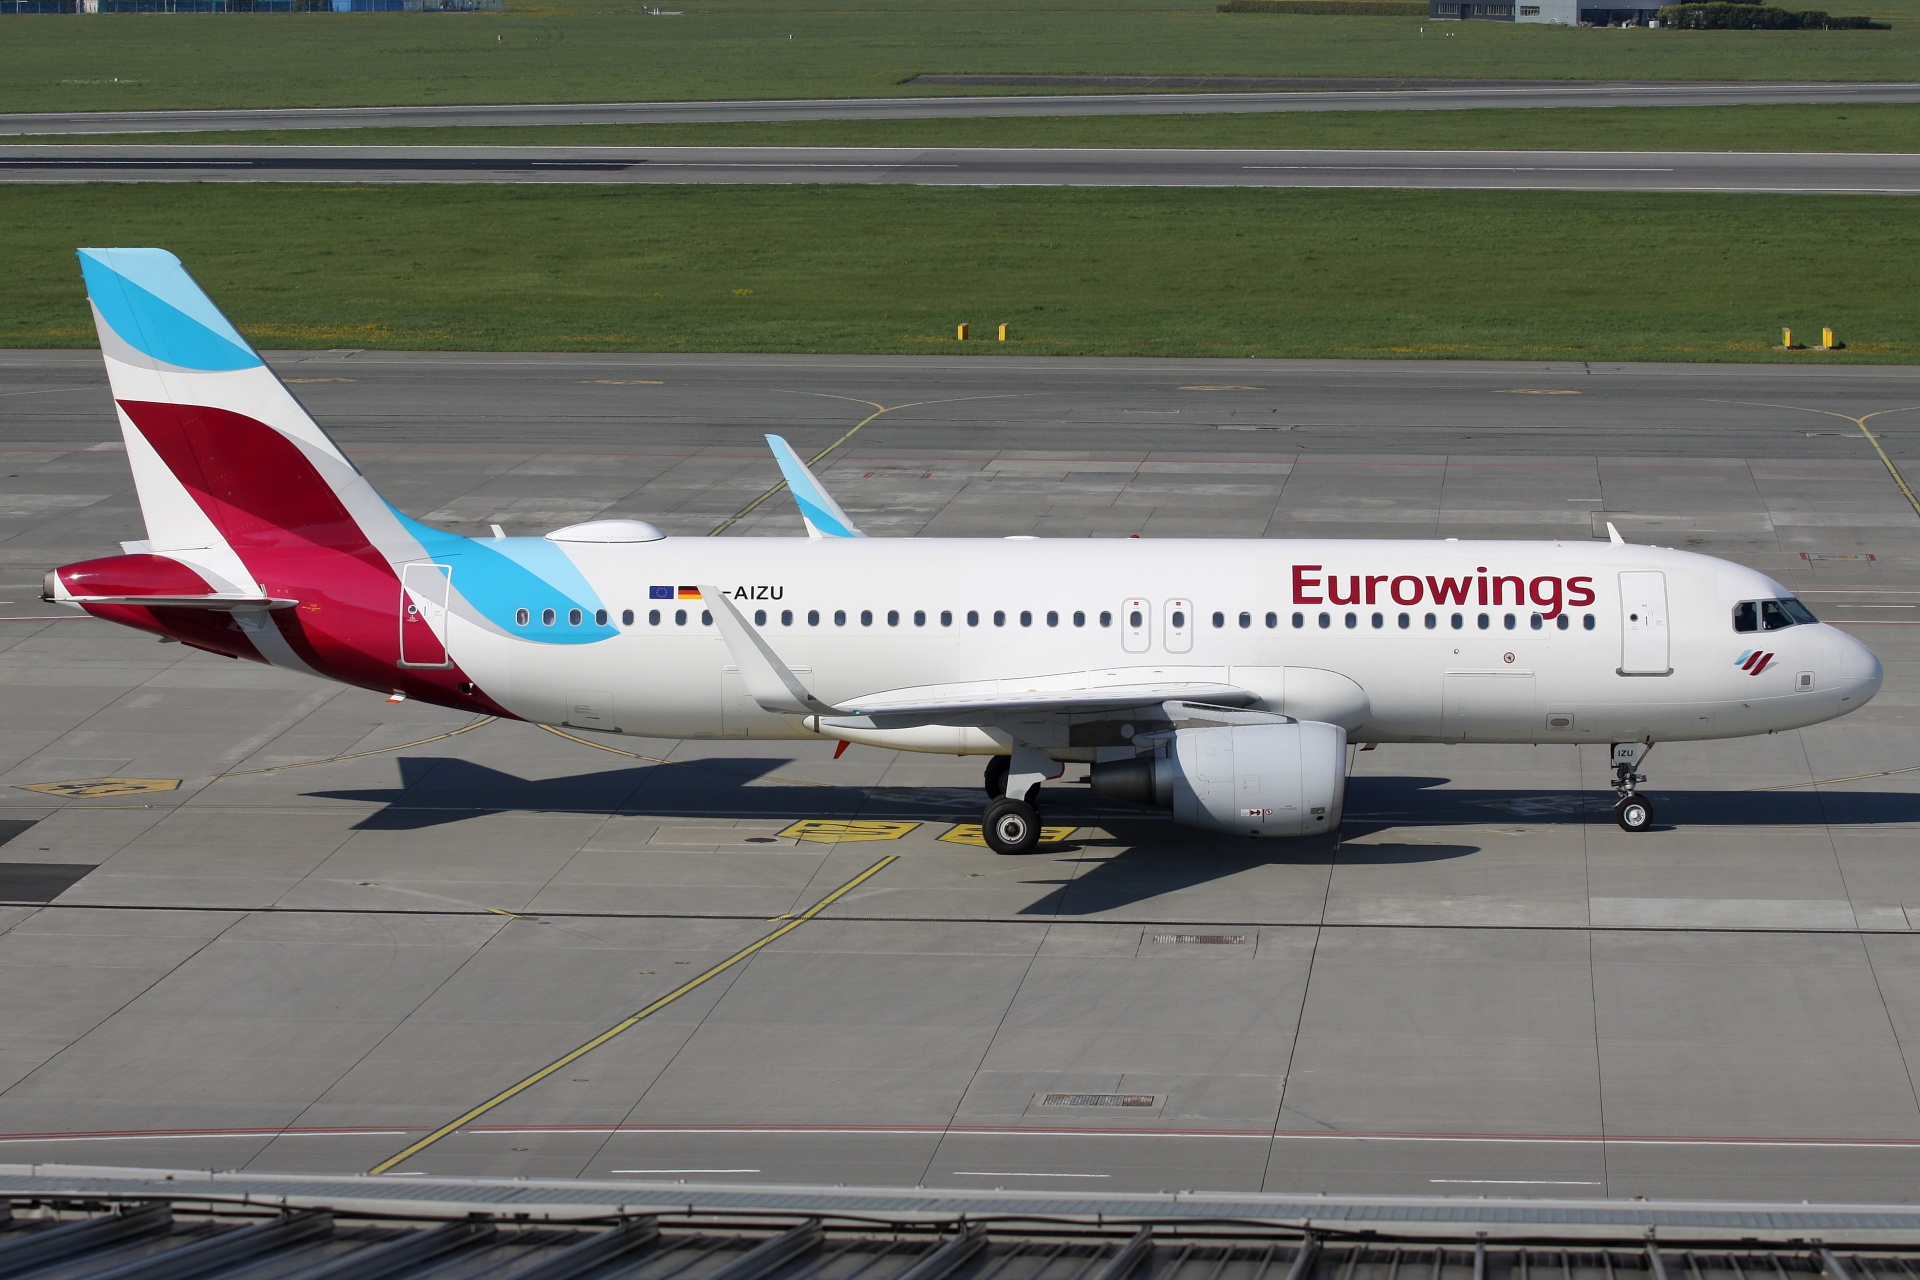 D-AIZU (Aircraft » EPWA Spotting » Airbus A320-200 » Eurowings)